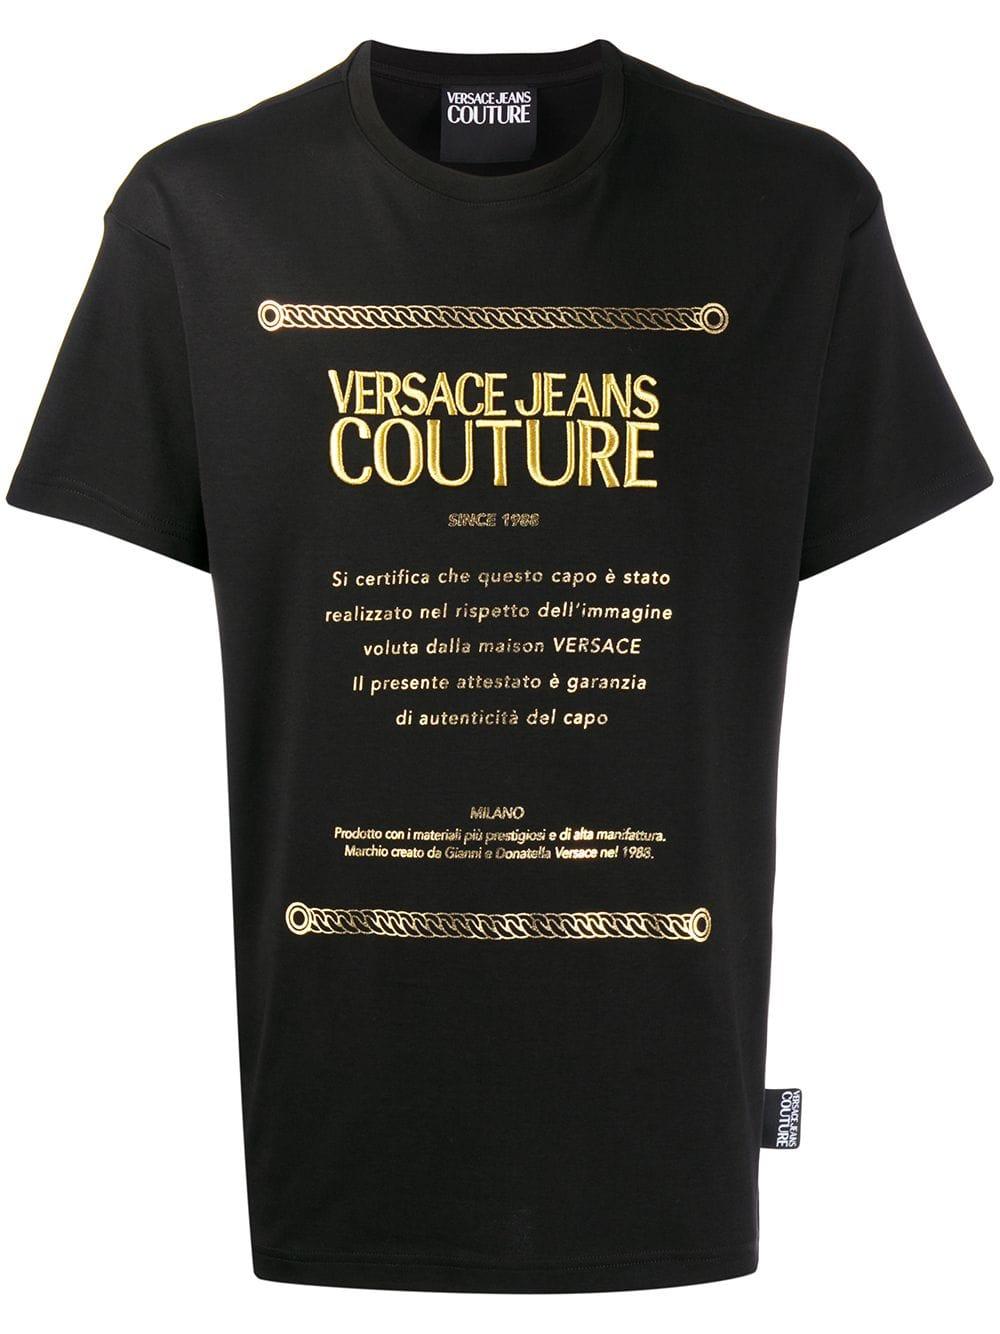 Versace Jeans Etichetta Label Print T-shirt in Black for Men - Lyst